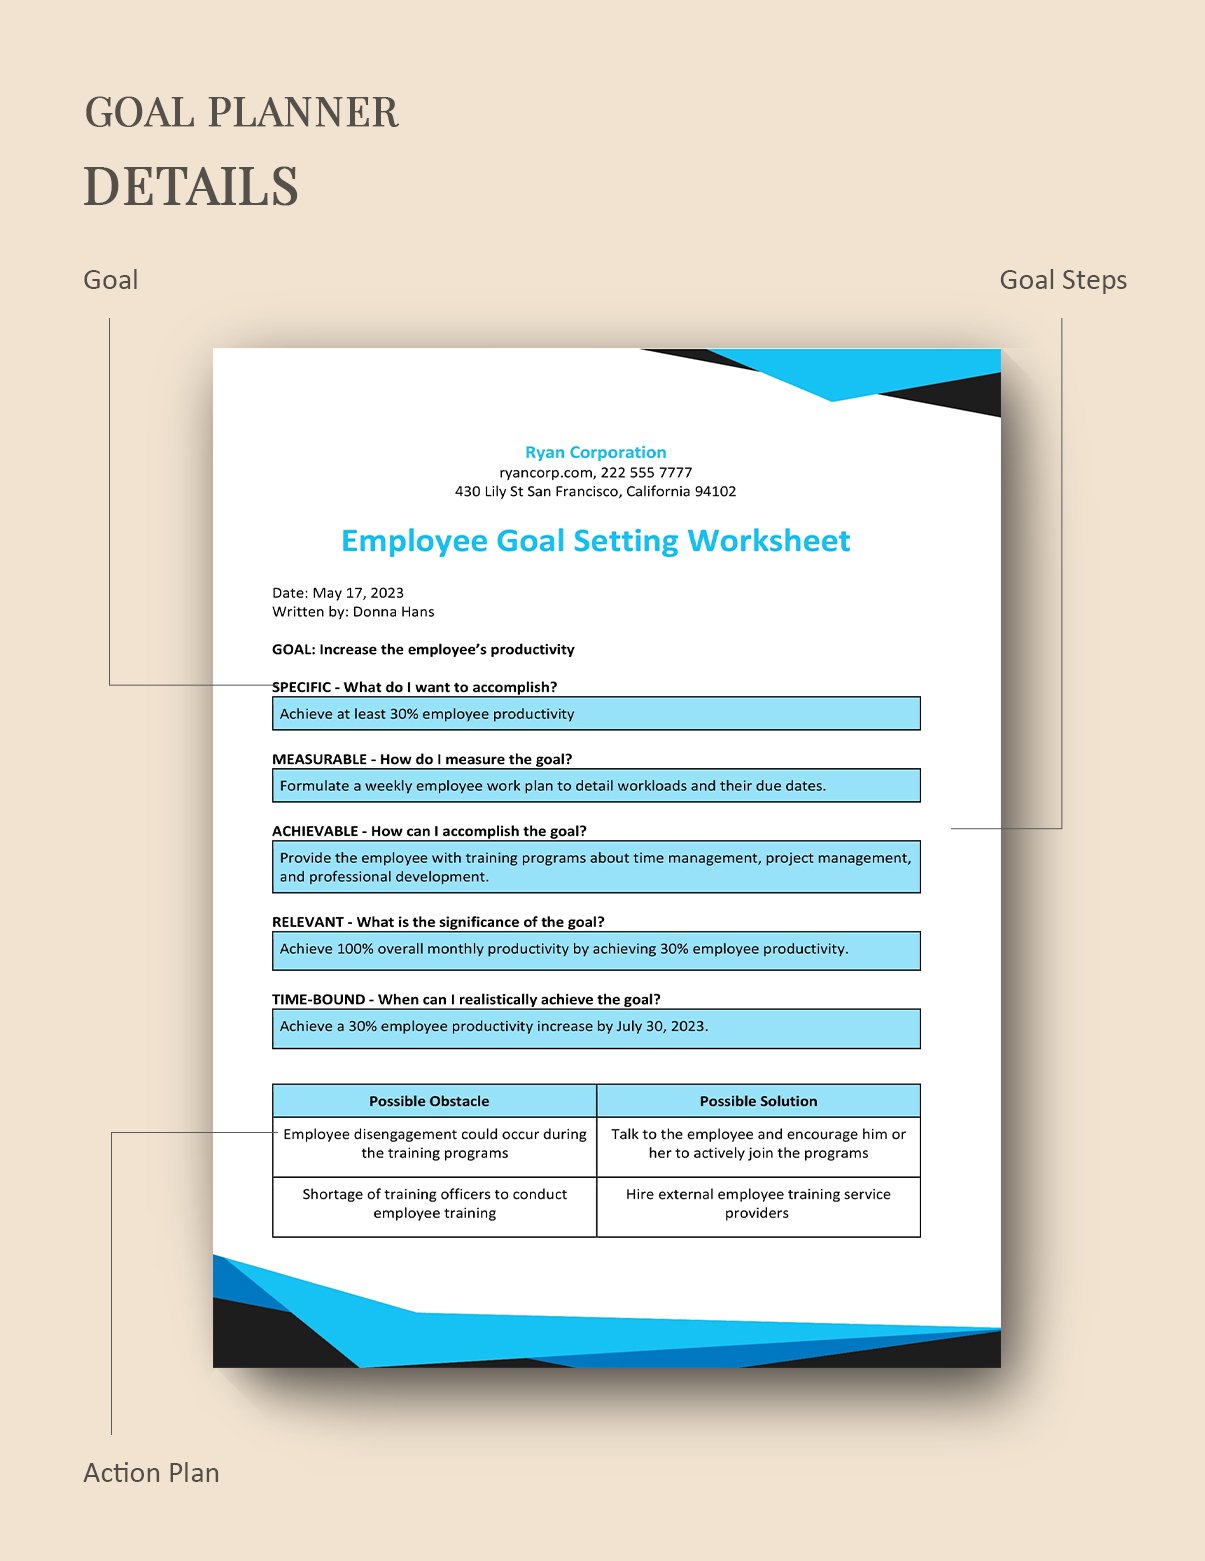 Employee Goal Setting Worksheet Template Download in Word, Google